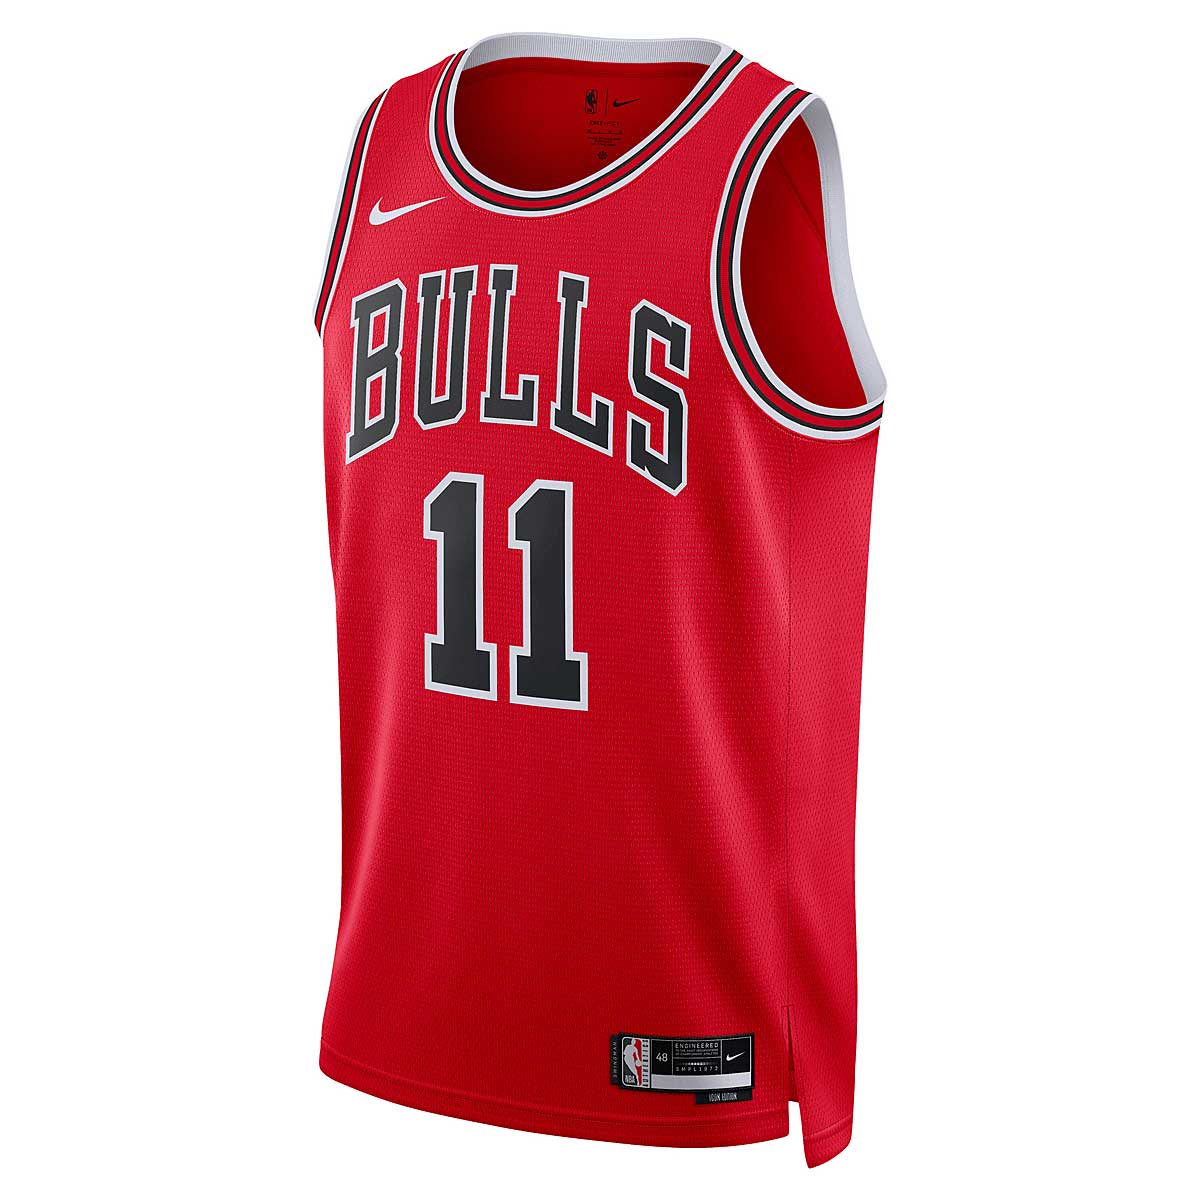 Nike NBA Chicago Bulls Dri-fit Icon Swingman Jersey Demar Derozan, University Rot/derozan Demar L